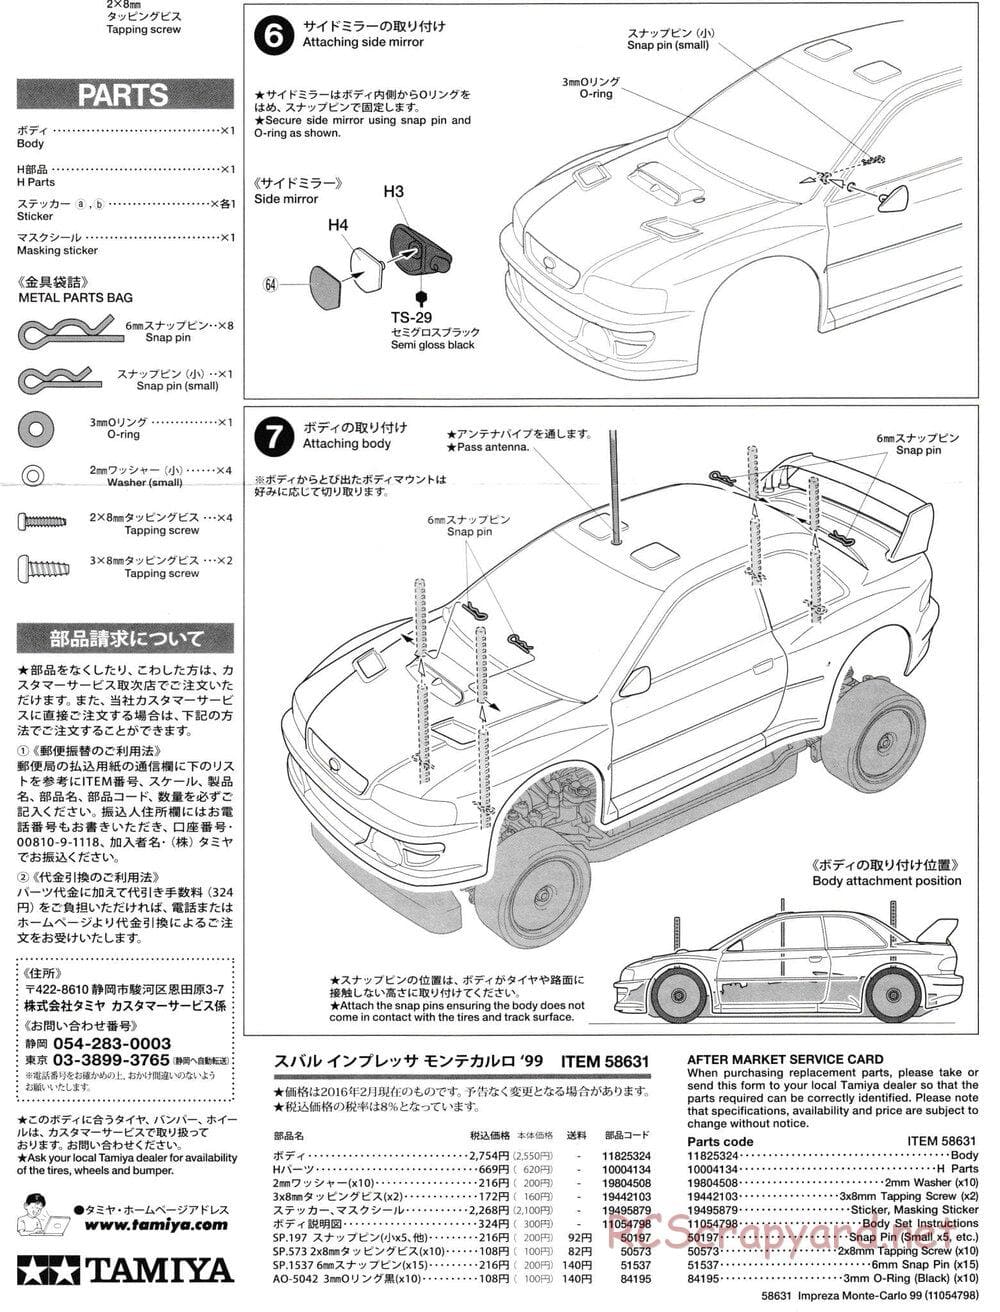 Tamiya - Subaru Impreza Monte-Carlo 99 - TT-02 Chassis - Body Manual - Page 4